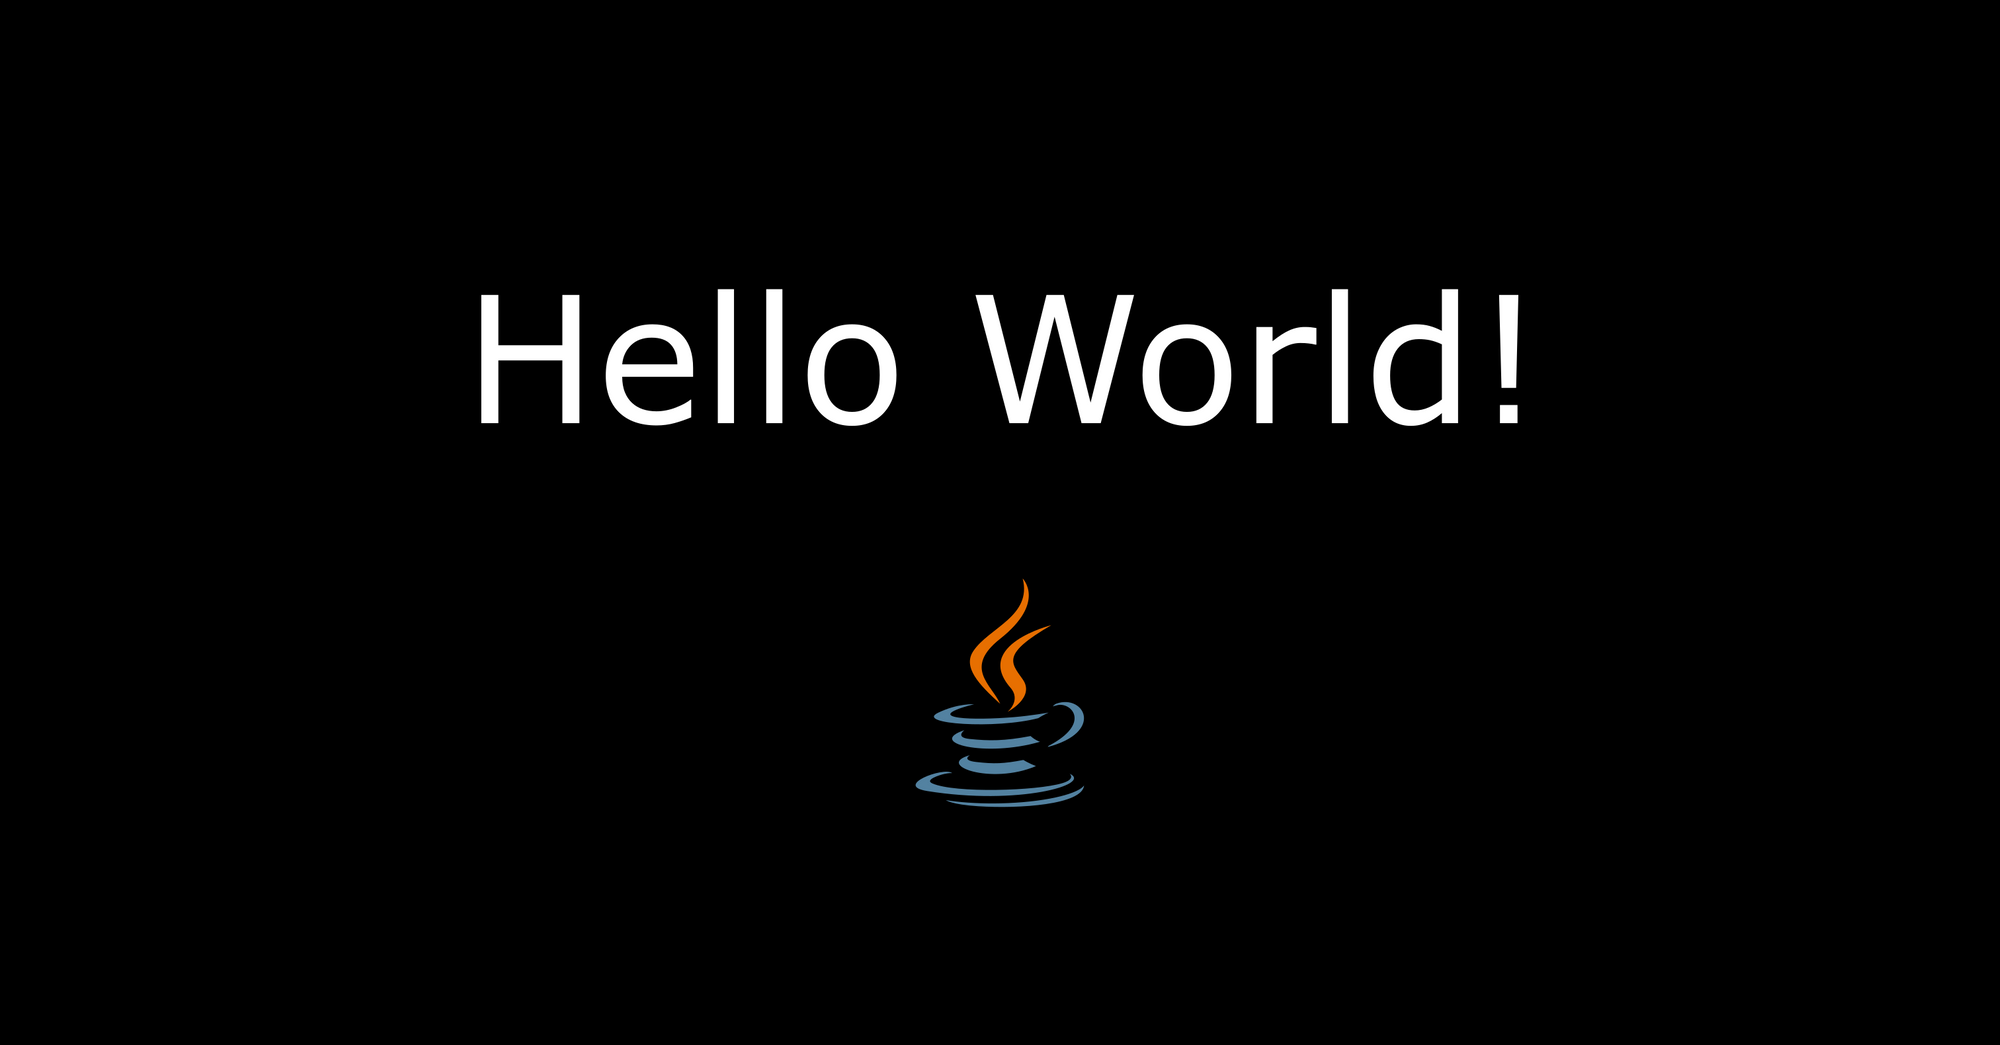 Hello World in Java – Example Program